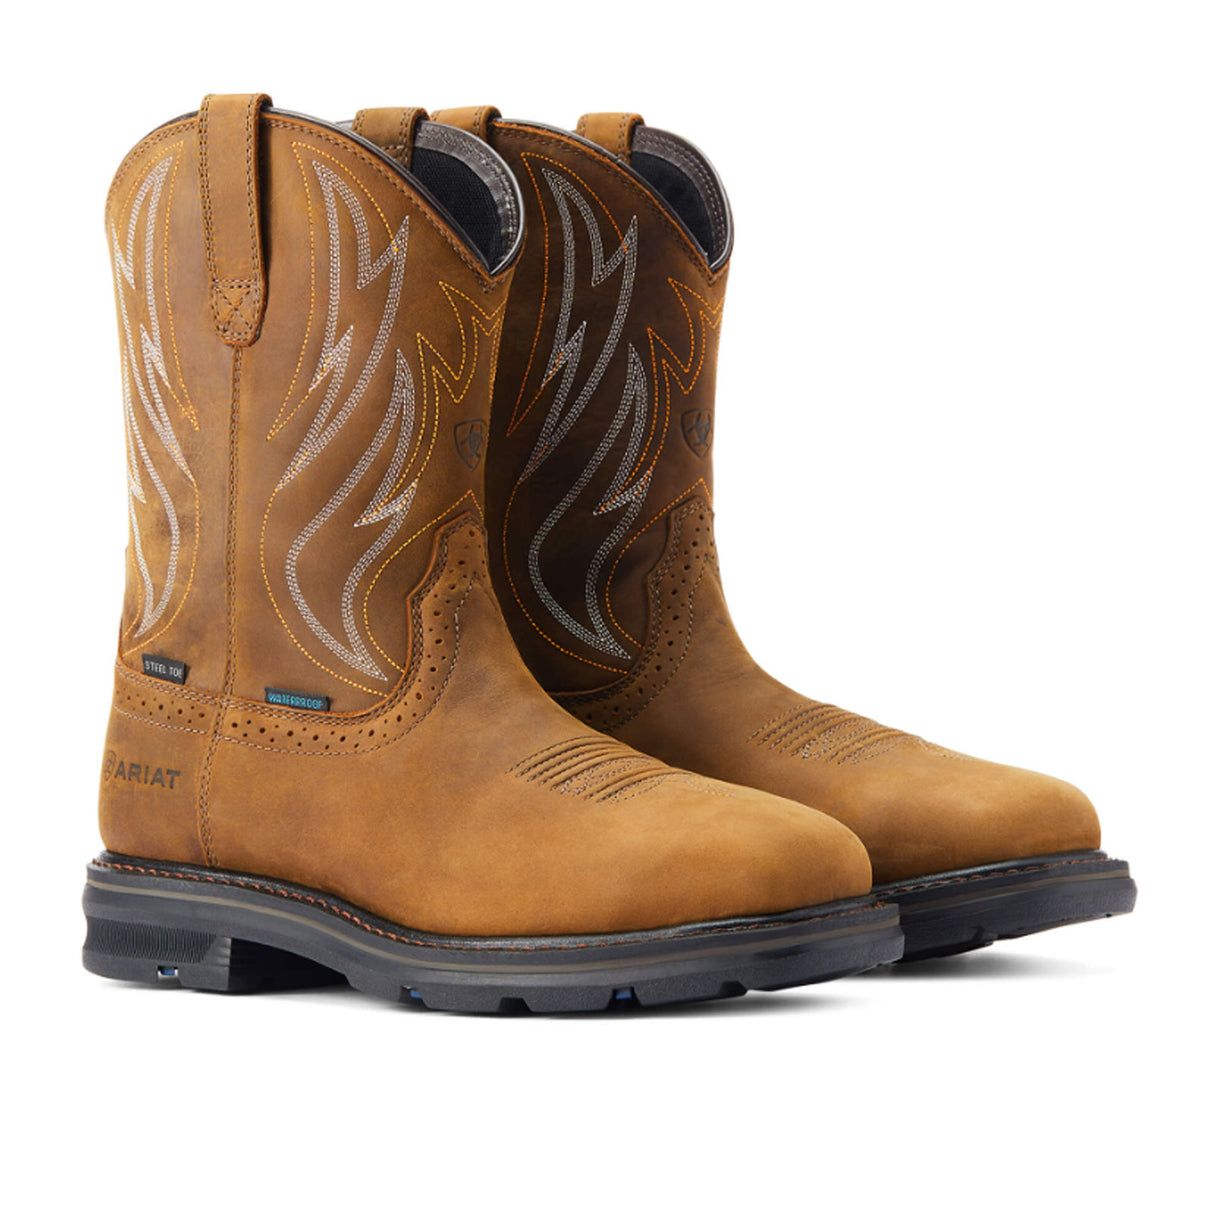 Ariat Sierra Shock Shield Waterproof Steel Toe Western Work Boot (Men) - Distressed Brown Boots - Fashion - High Boot - The Heel Shoe Fitters